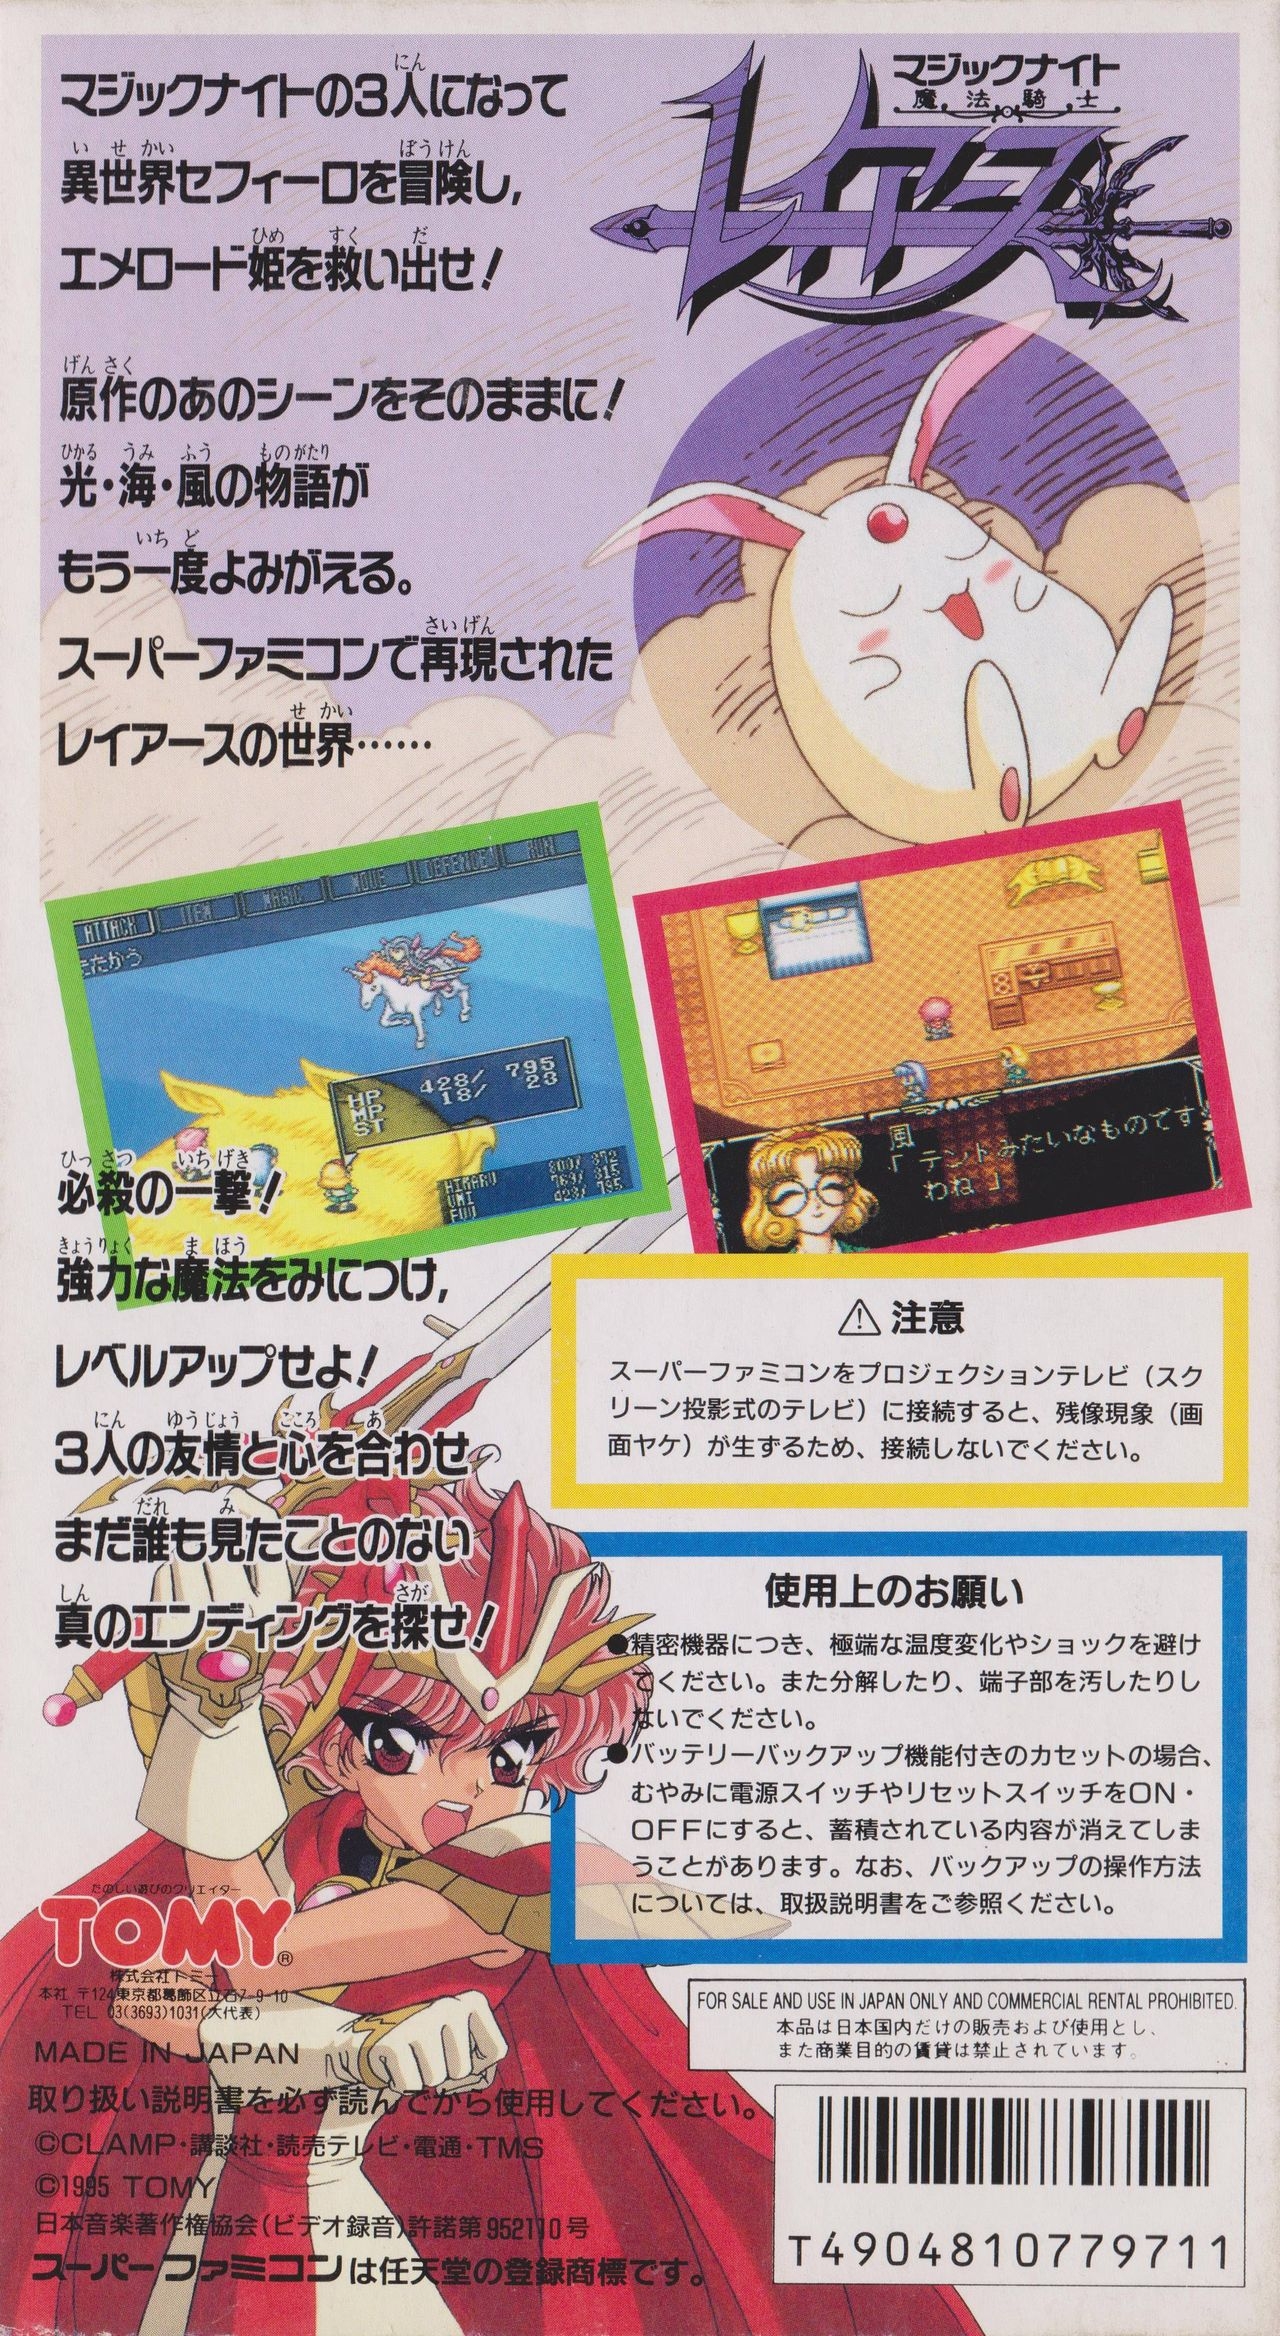 Magic Knight Rayearth - Box & Manual Scans [Super Famicom] 1